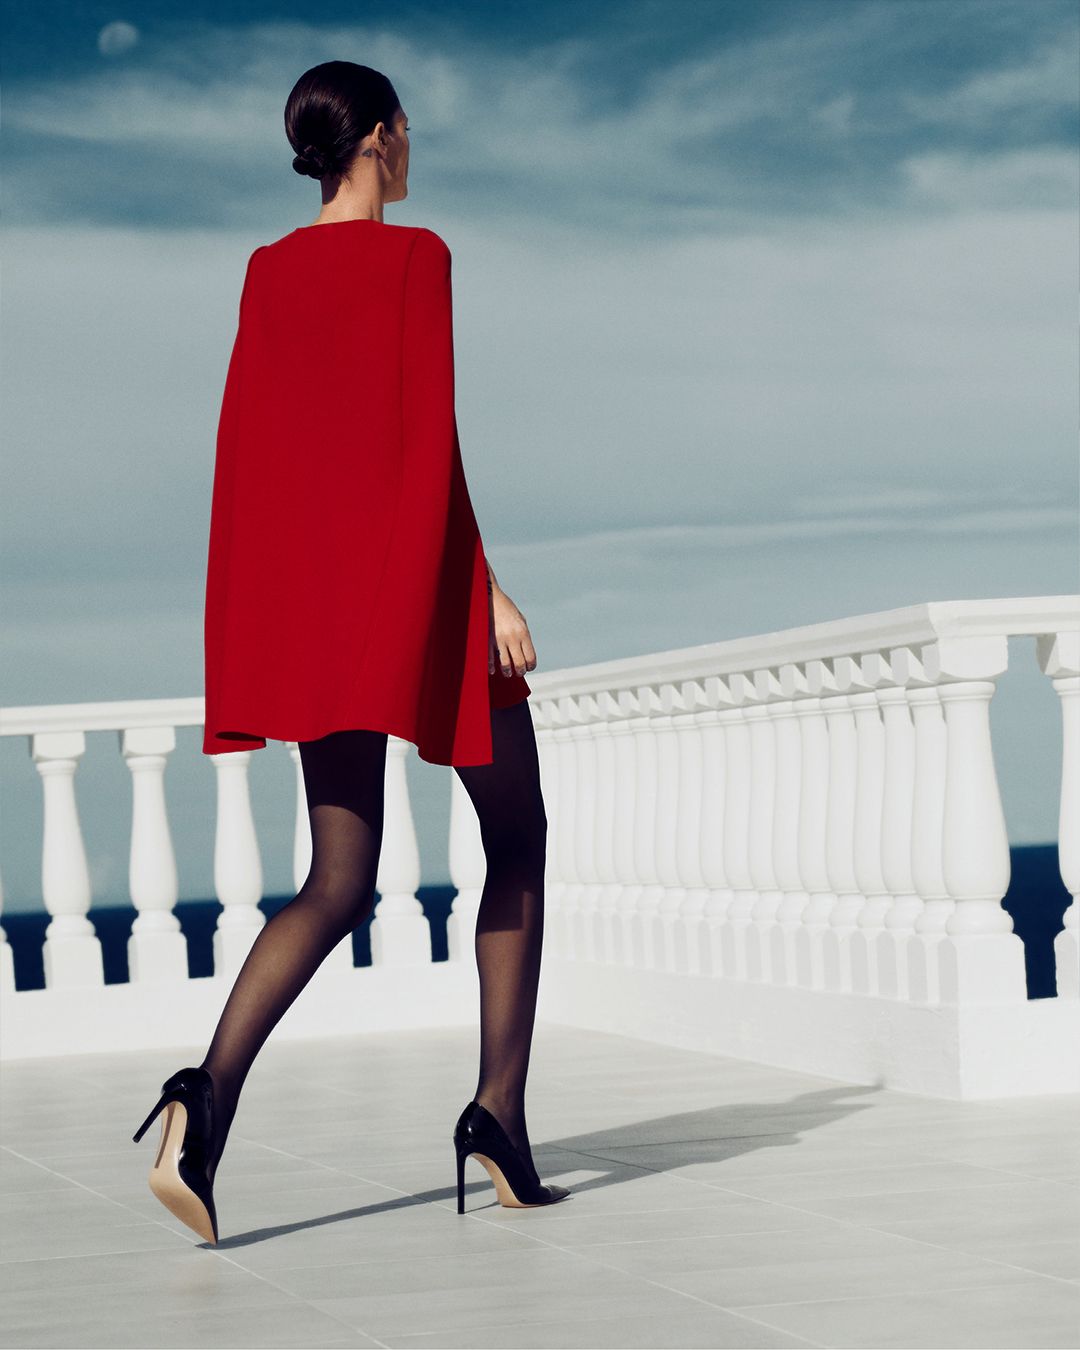 Back view of model in Crepe Knit Red Cape Dress walking toward balcony